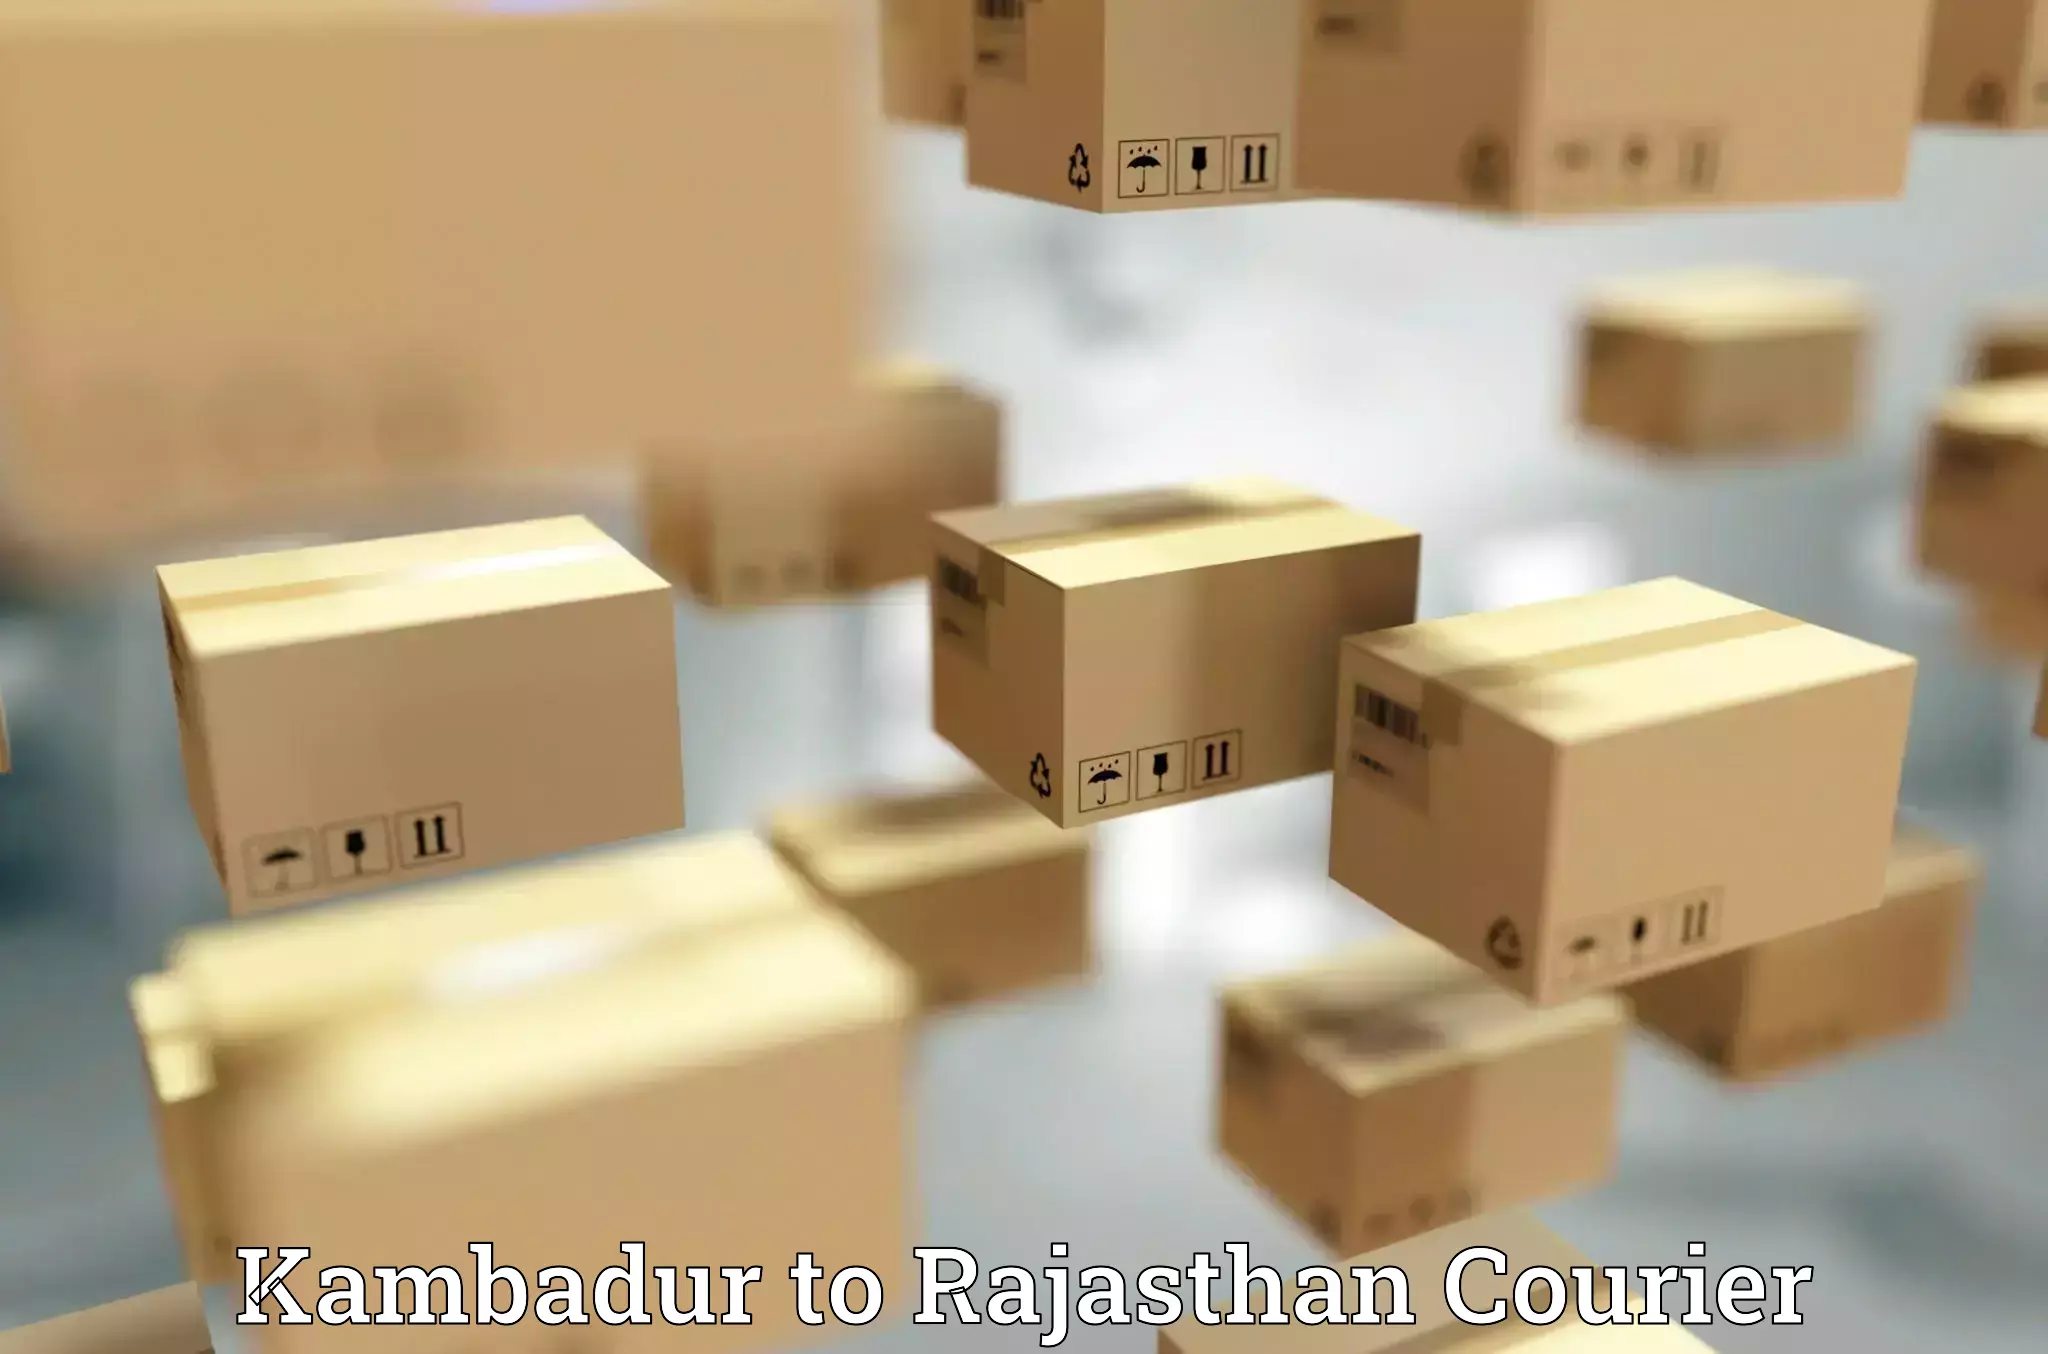 Courier service comparison in Kambadur to Kumbhalgarh